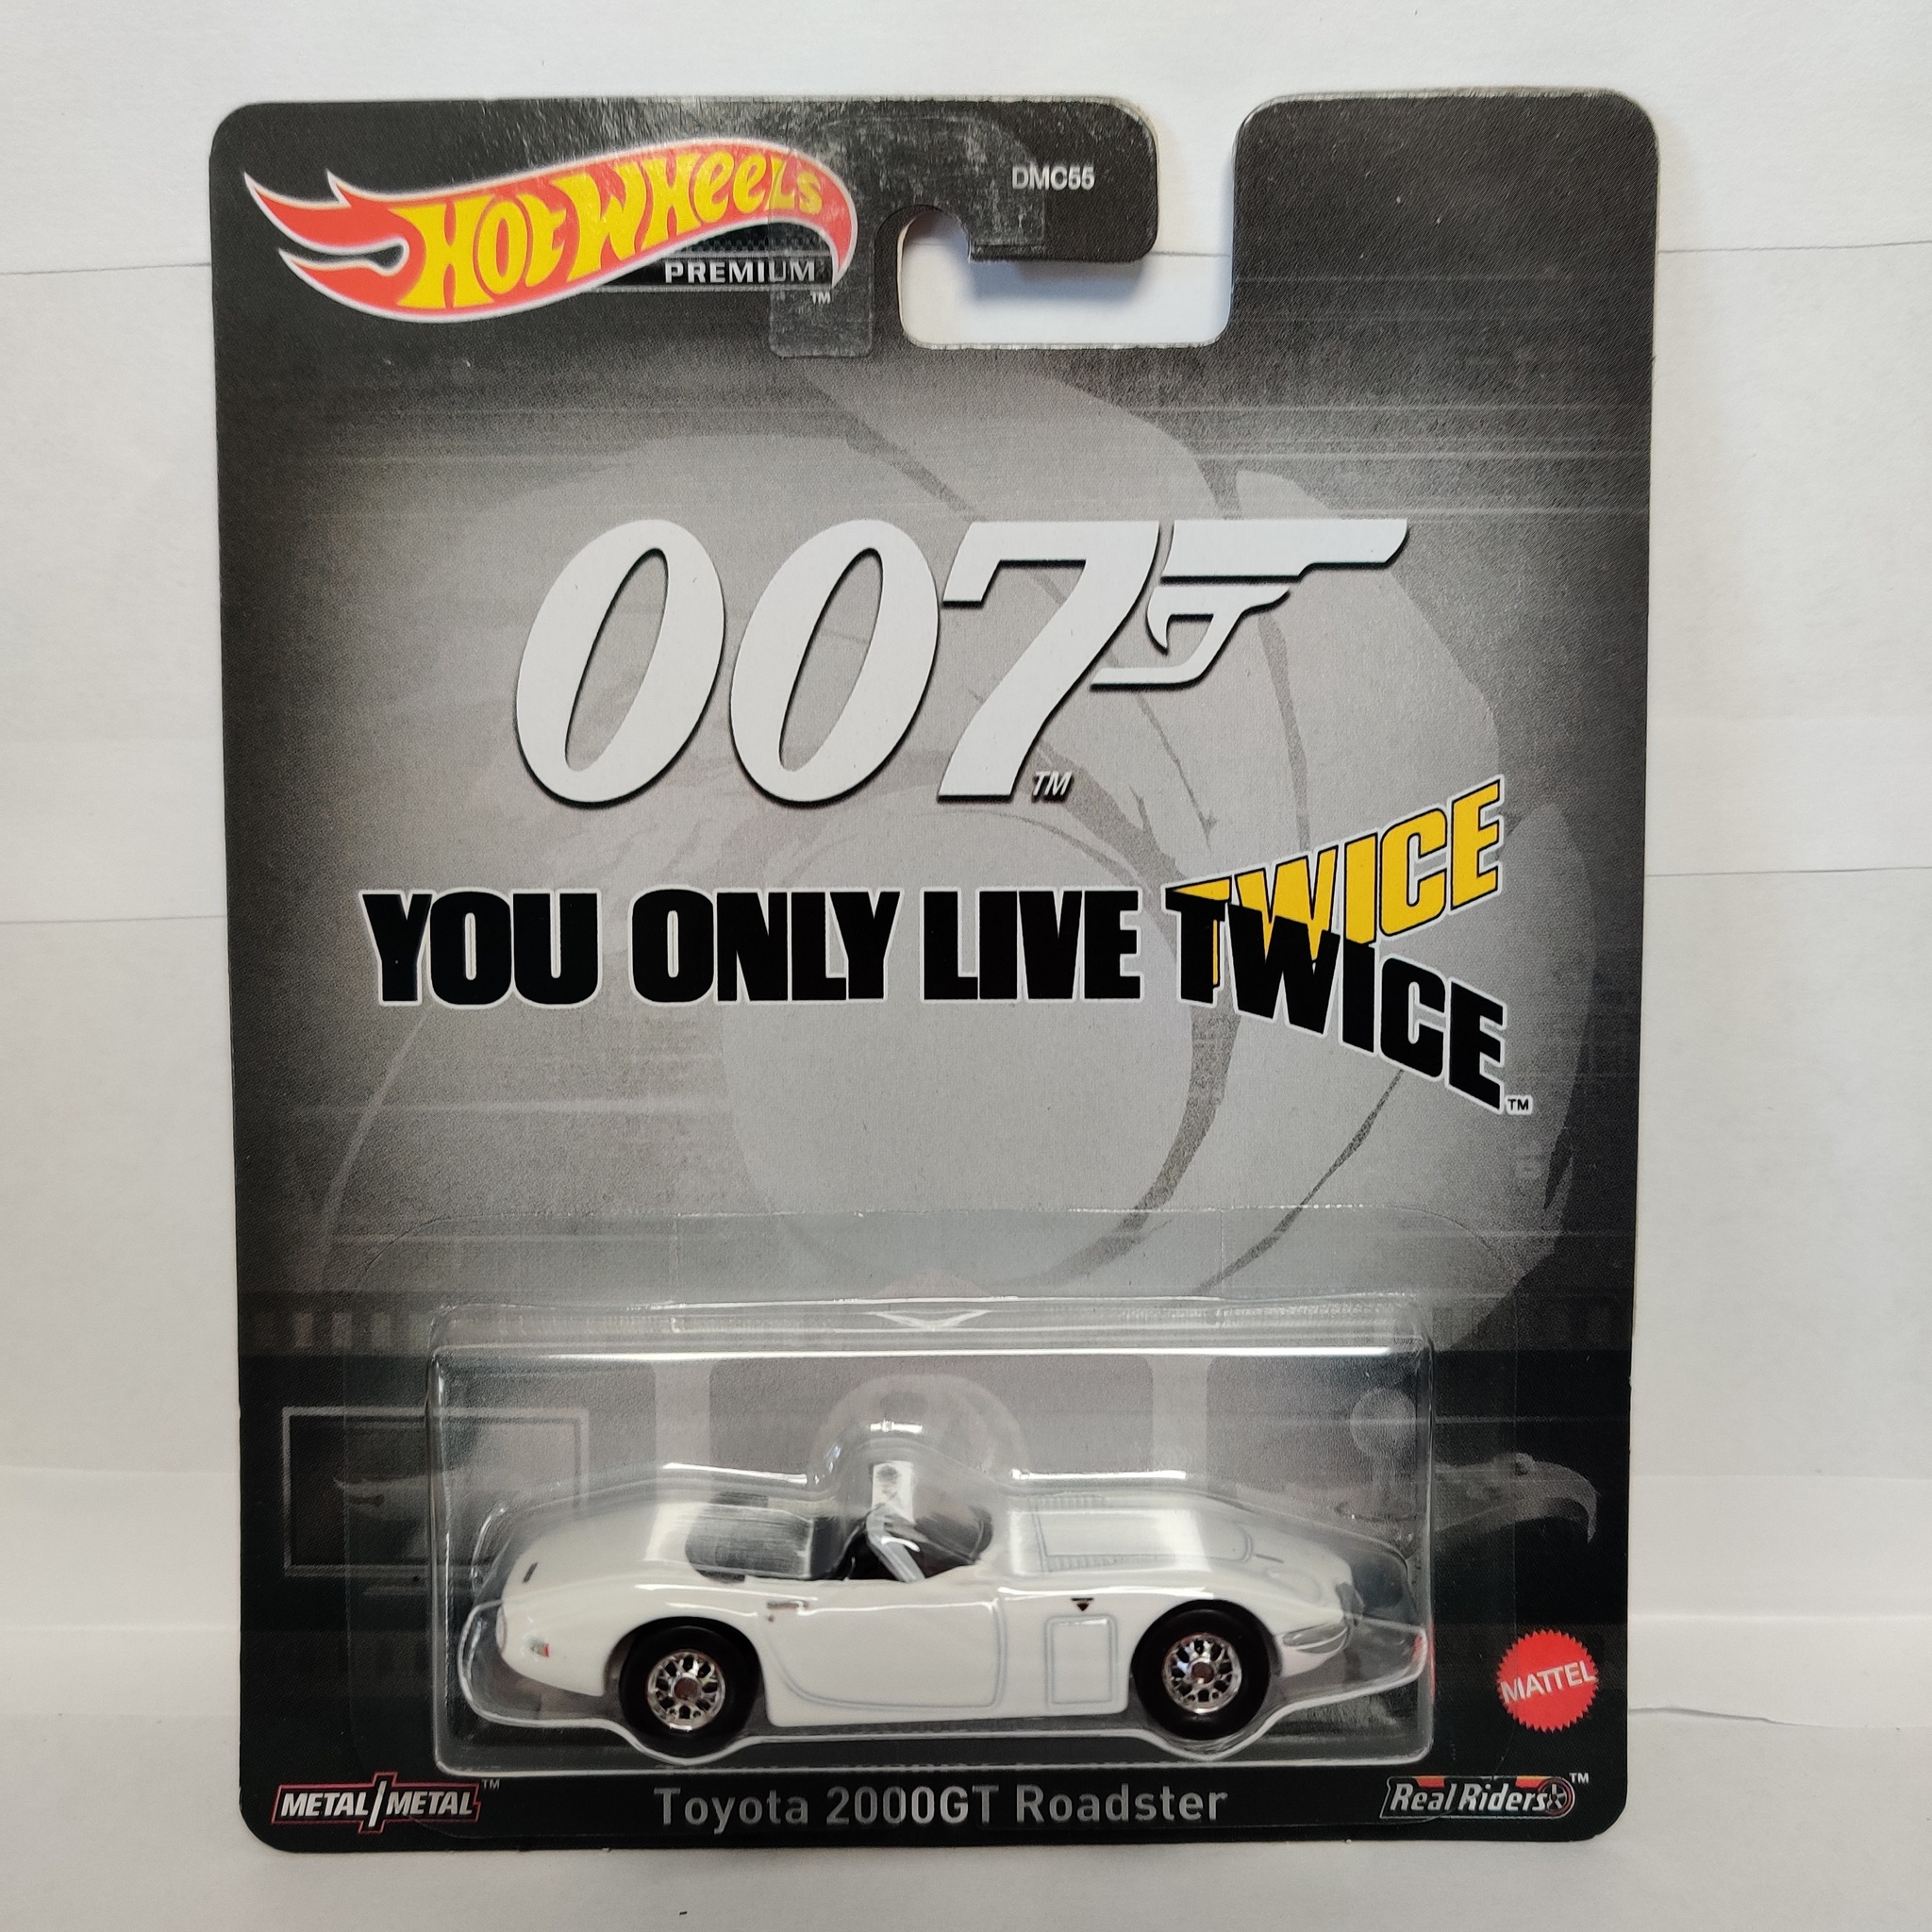 Skala 1/64 Hot Wheels PREMIUM, Toyota 2000GT Roadster, Bond 007 "You only live twice"